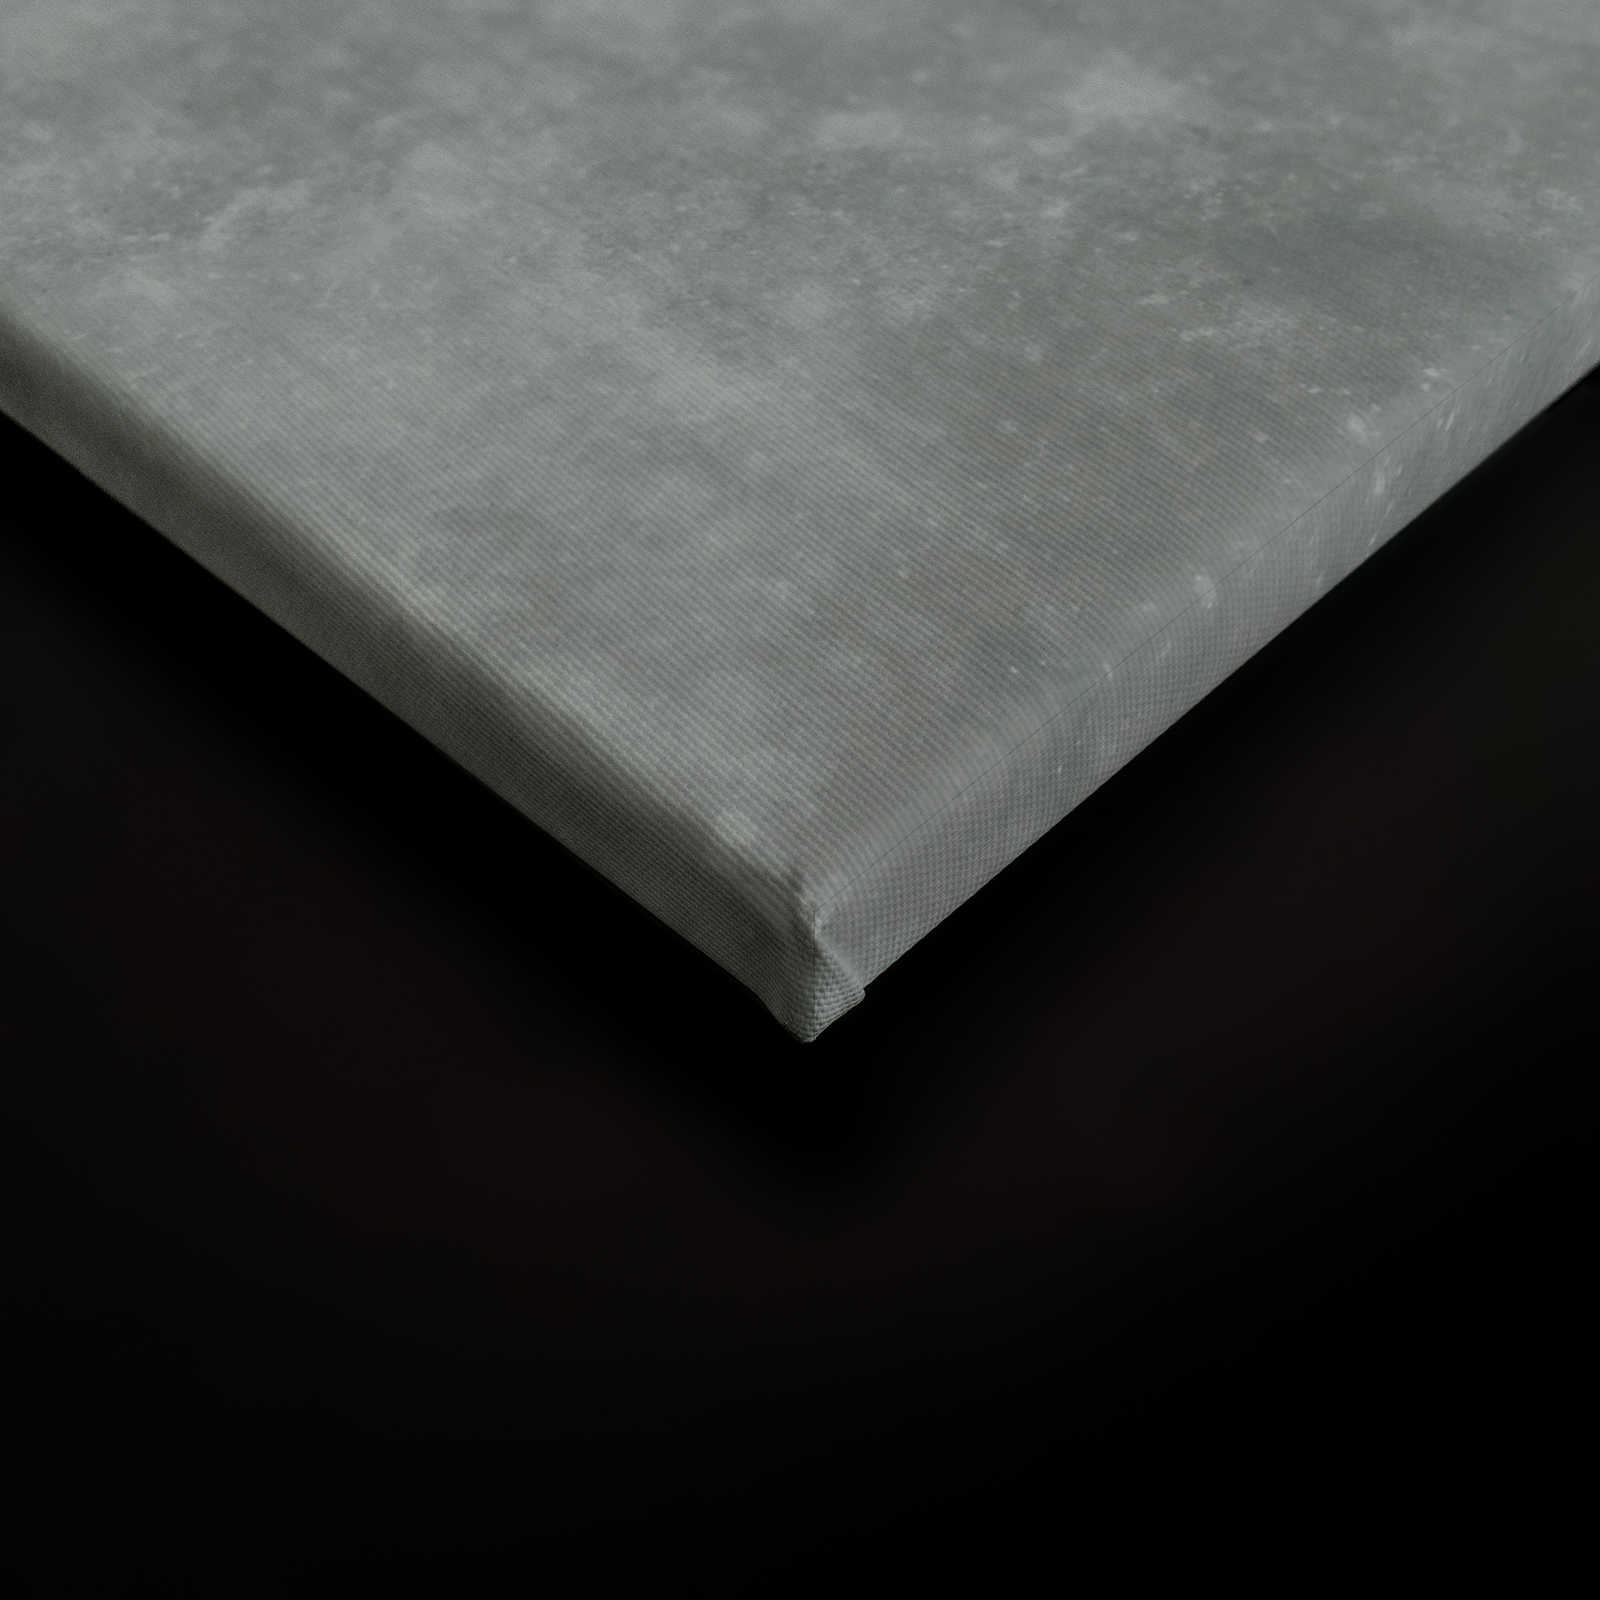             Concrete-look canvas picture with stripes | grey, blue - 1.20 m x 0.80 m
        